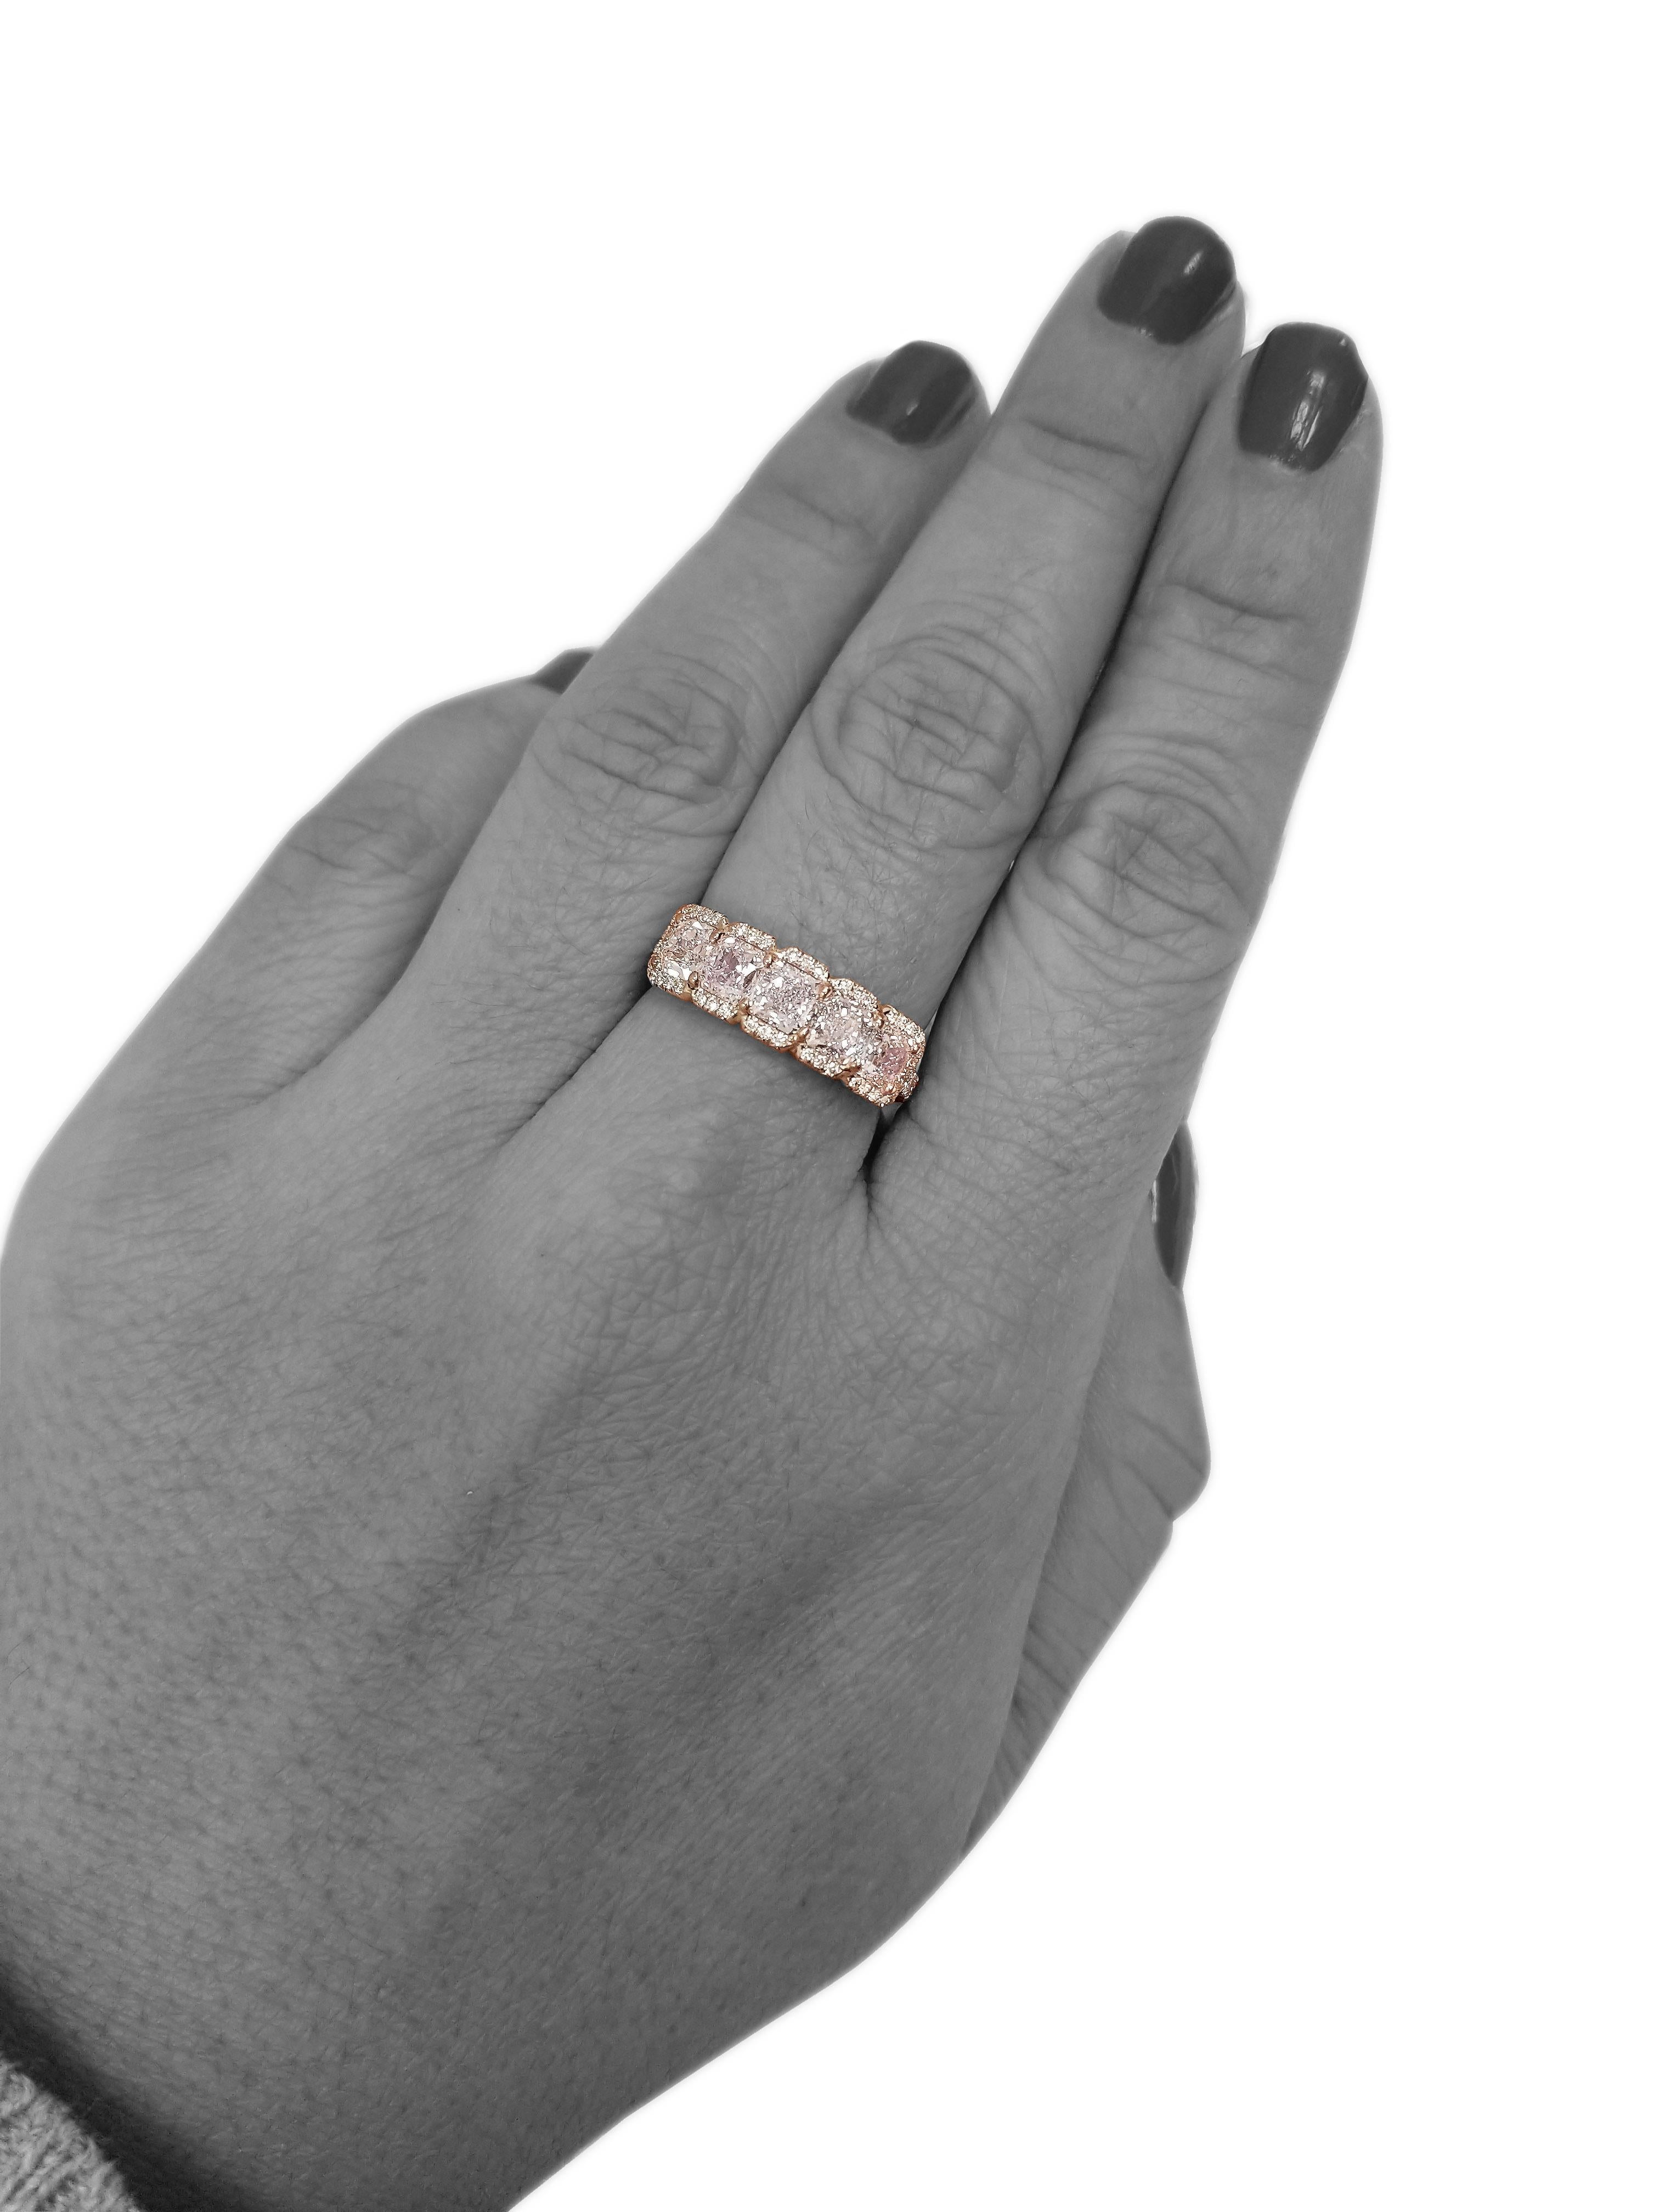 Contemporary Scarselli 2.17 Pink Diamond Band Ring in Platinum & 18 Karat Gold GIA Certified